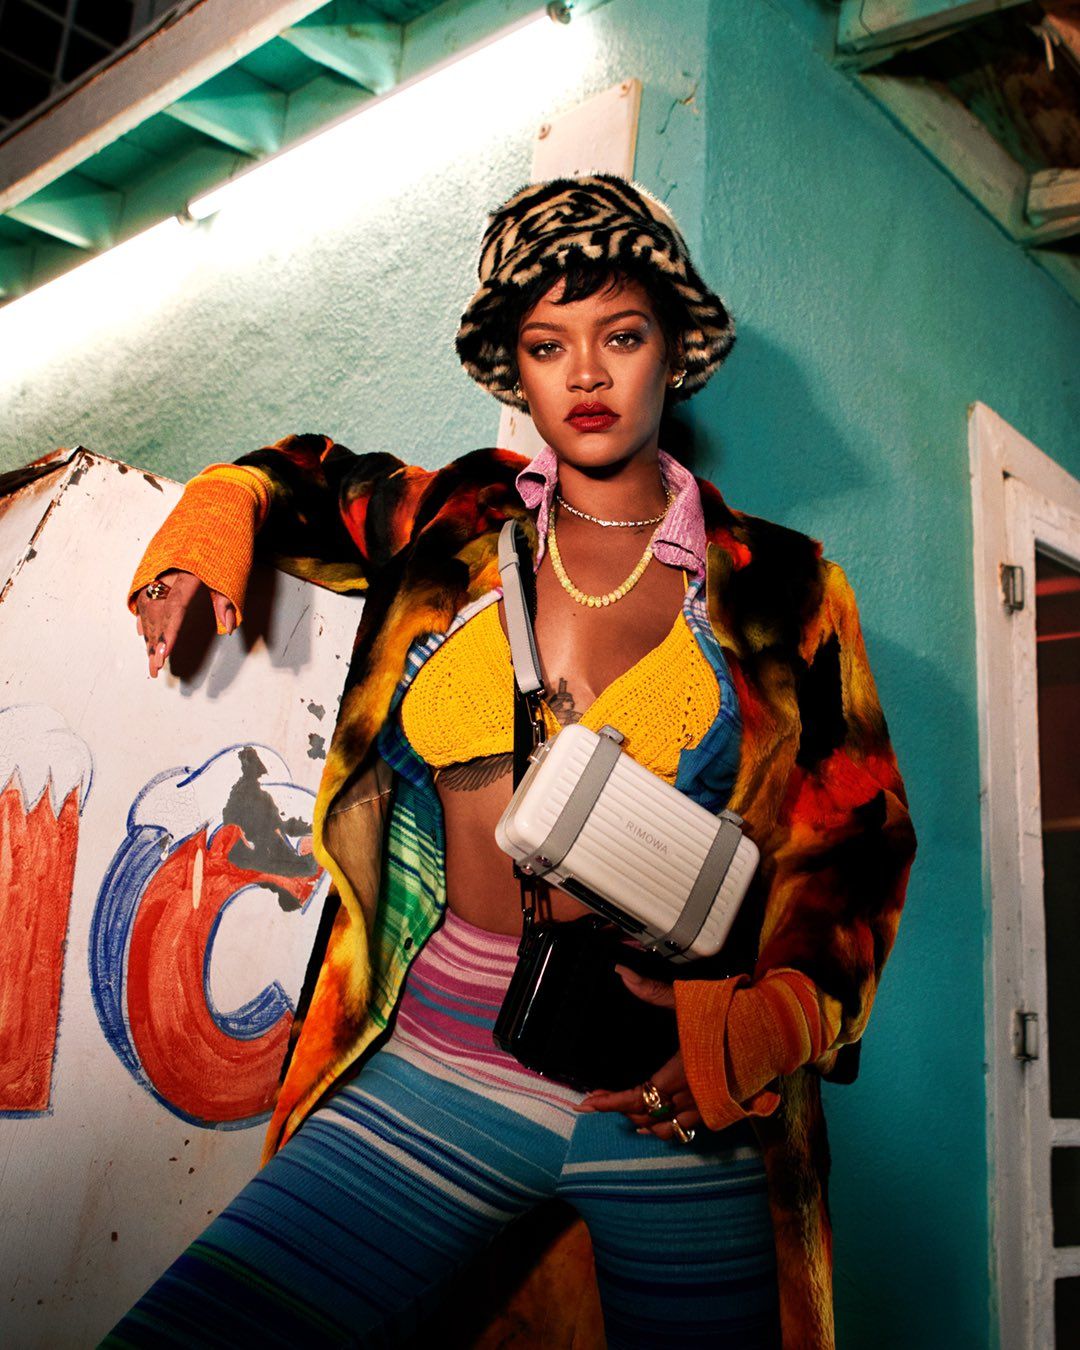 RIMOWA Unveil Campaign starring Rihanna, LeBron James & more